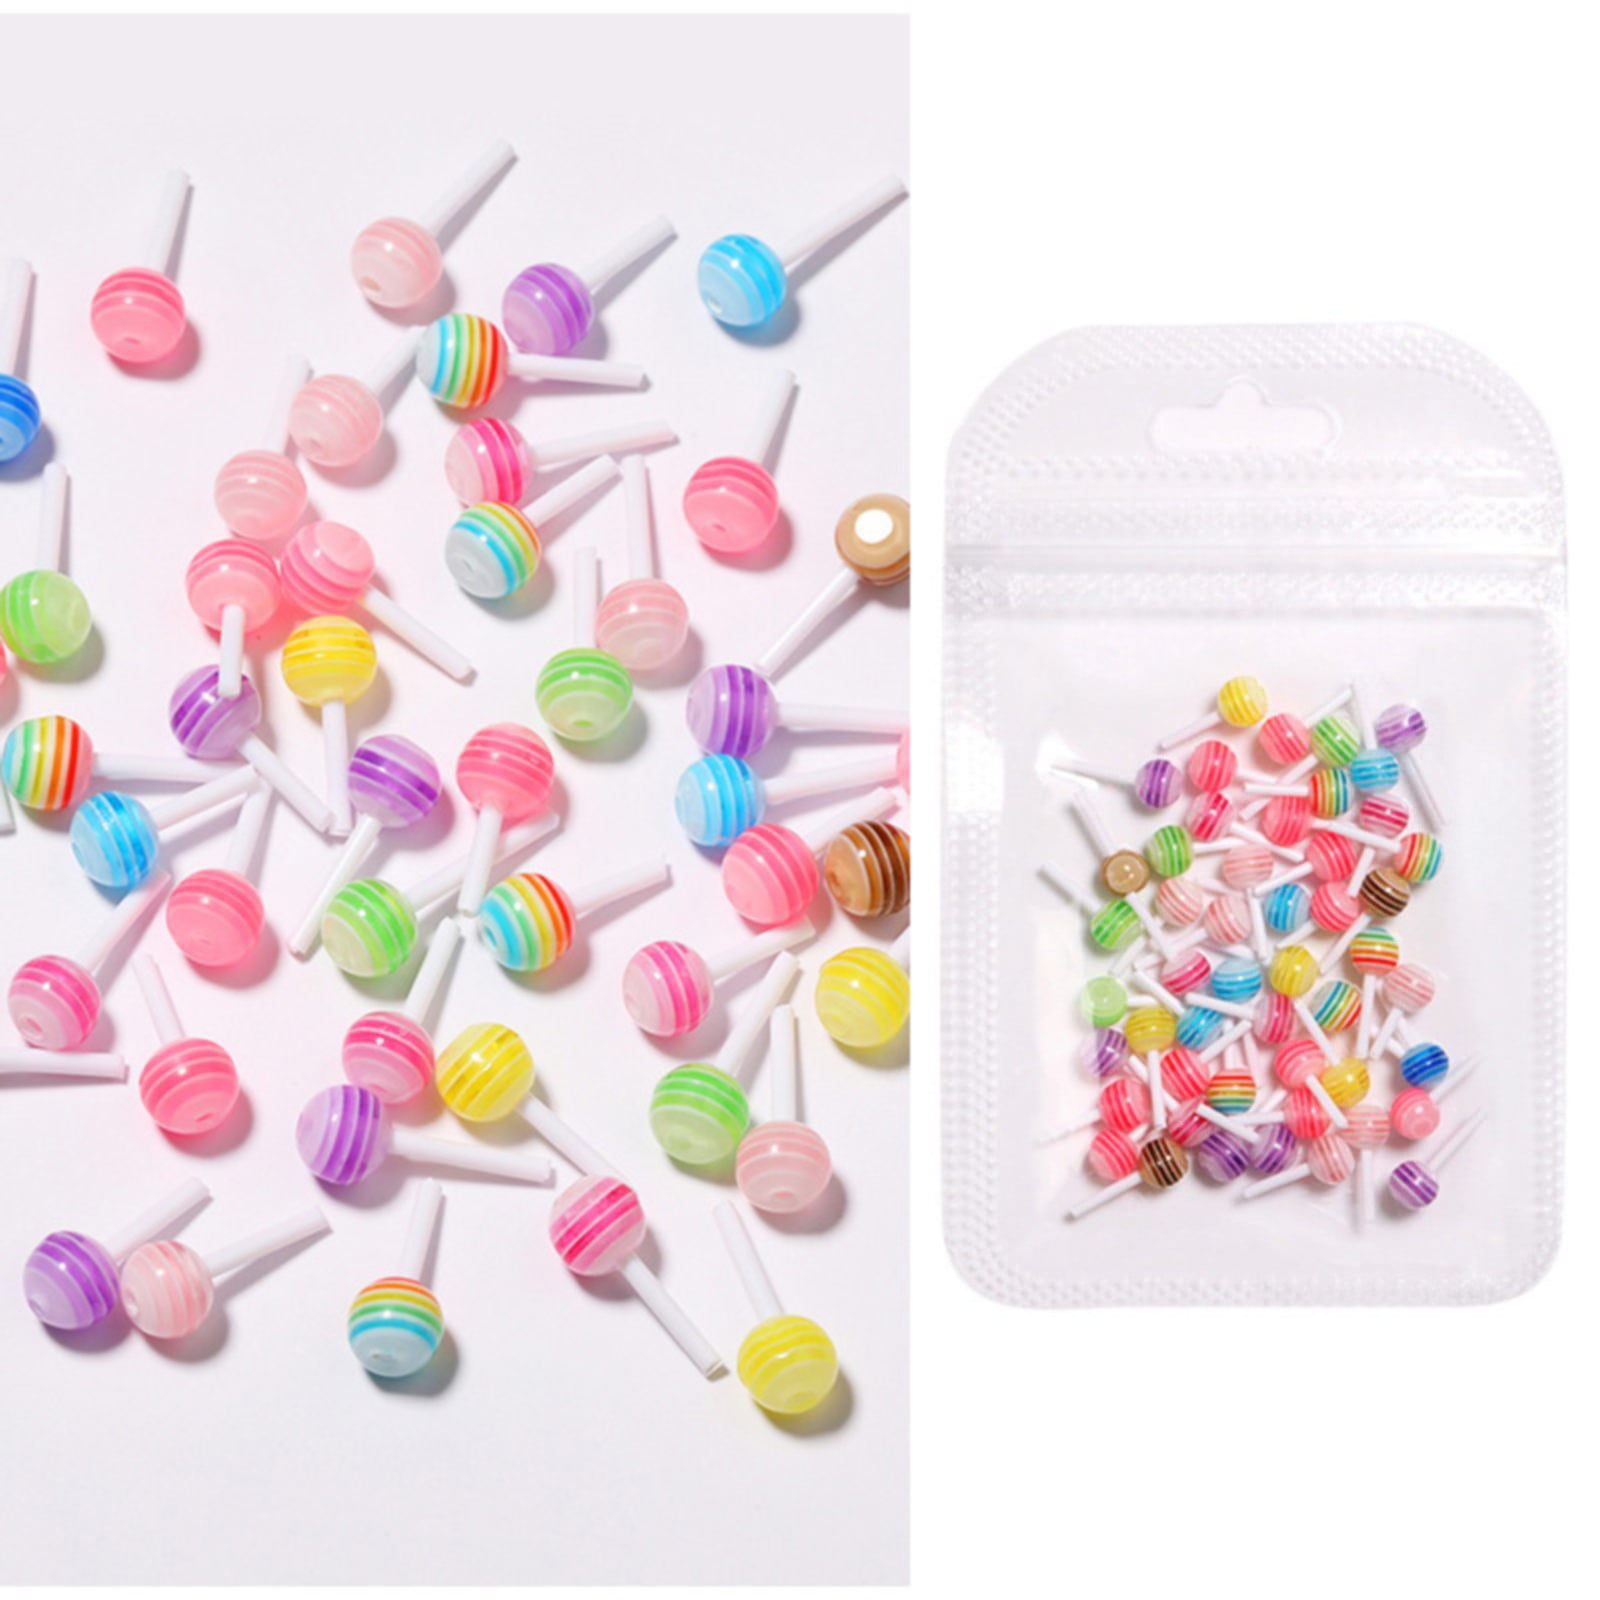 Negj 50pcs 3D Gummy Candy Nail Charms Colorful Sugar Gummie Candy Lollipop Cute Kawaii 3D Nail Art Charms for Nail Art Designs DIY Crafting Accessories